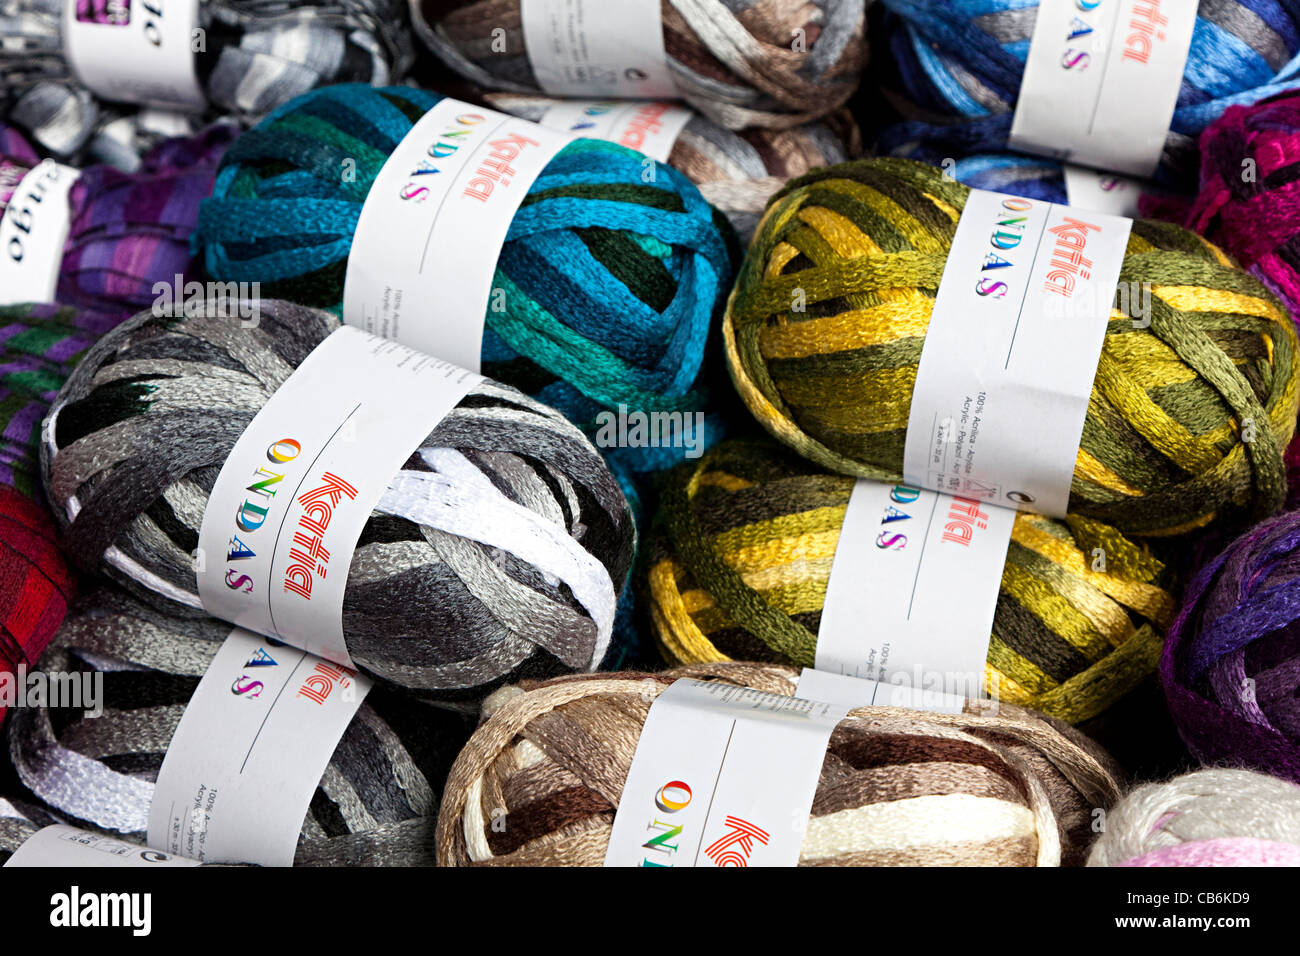 Balls of wool knitting yarns in acrylic mixes on sale Stock Photo